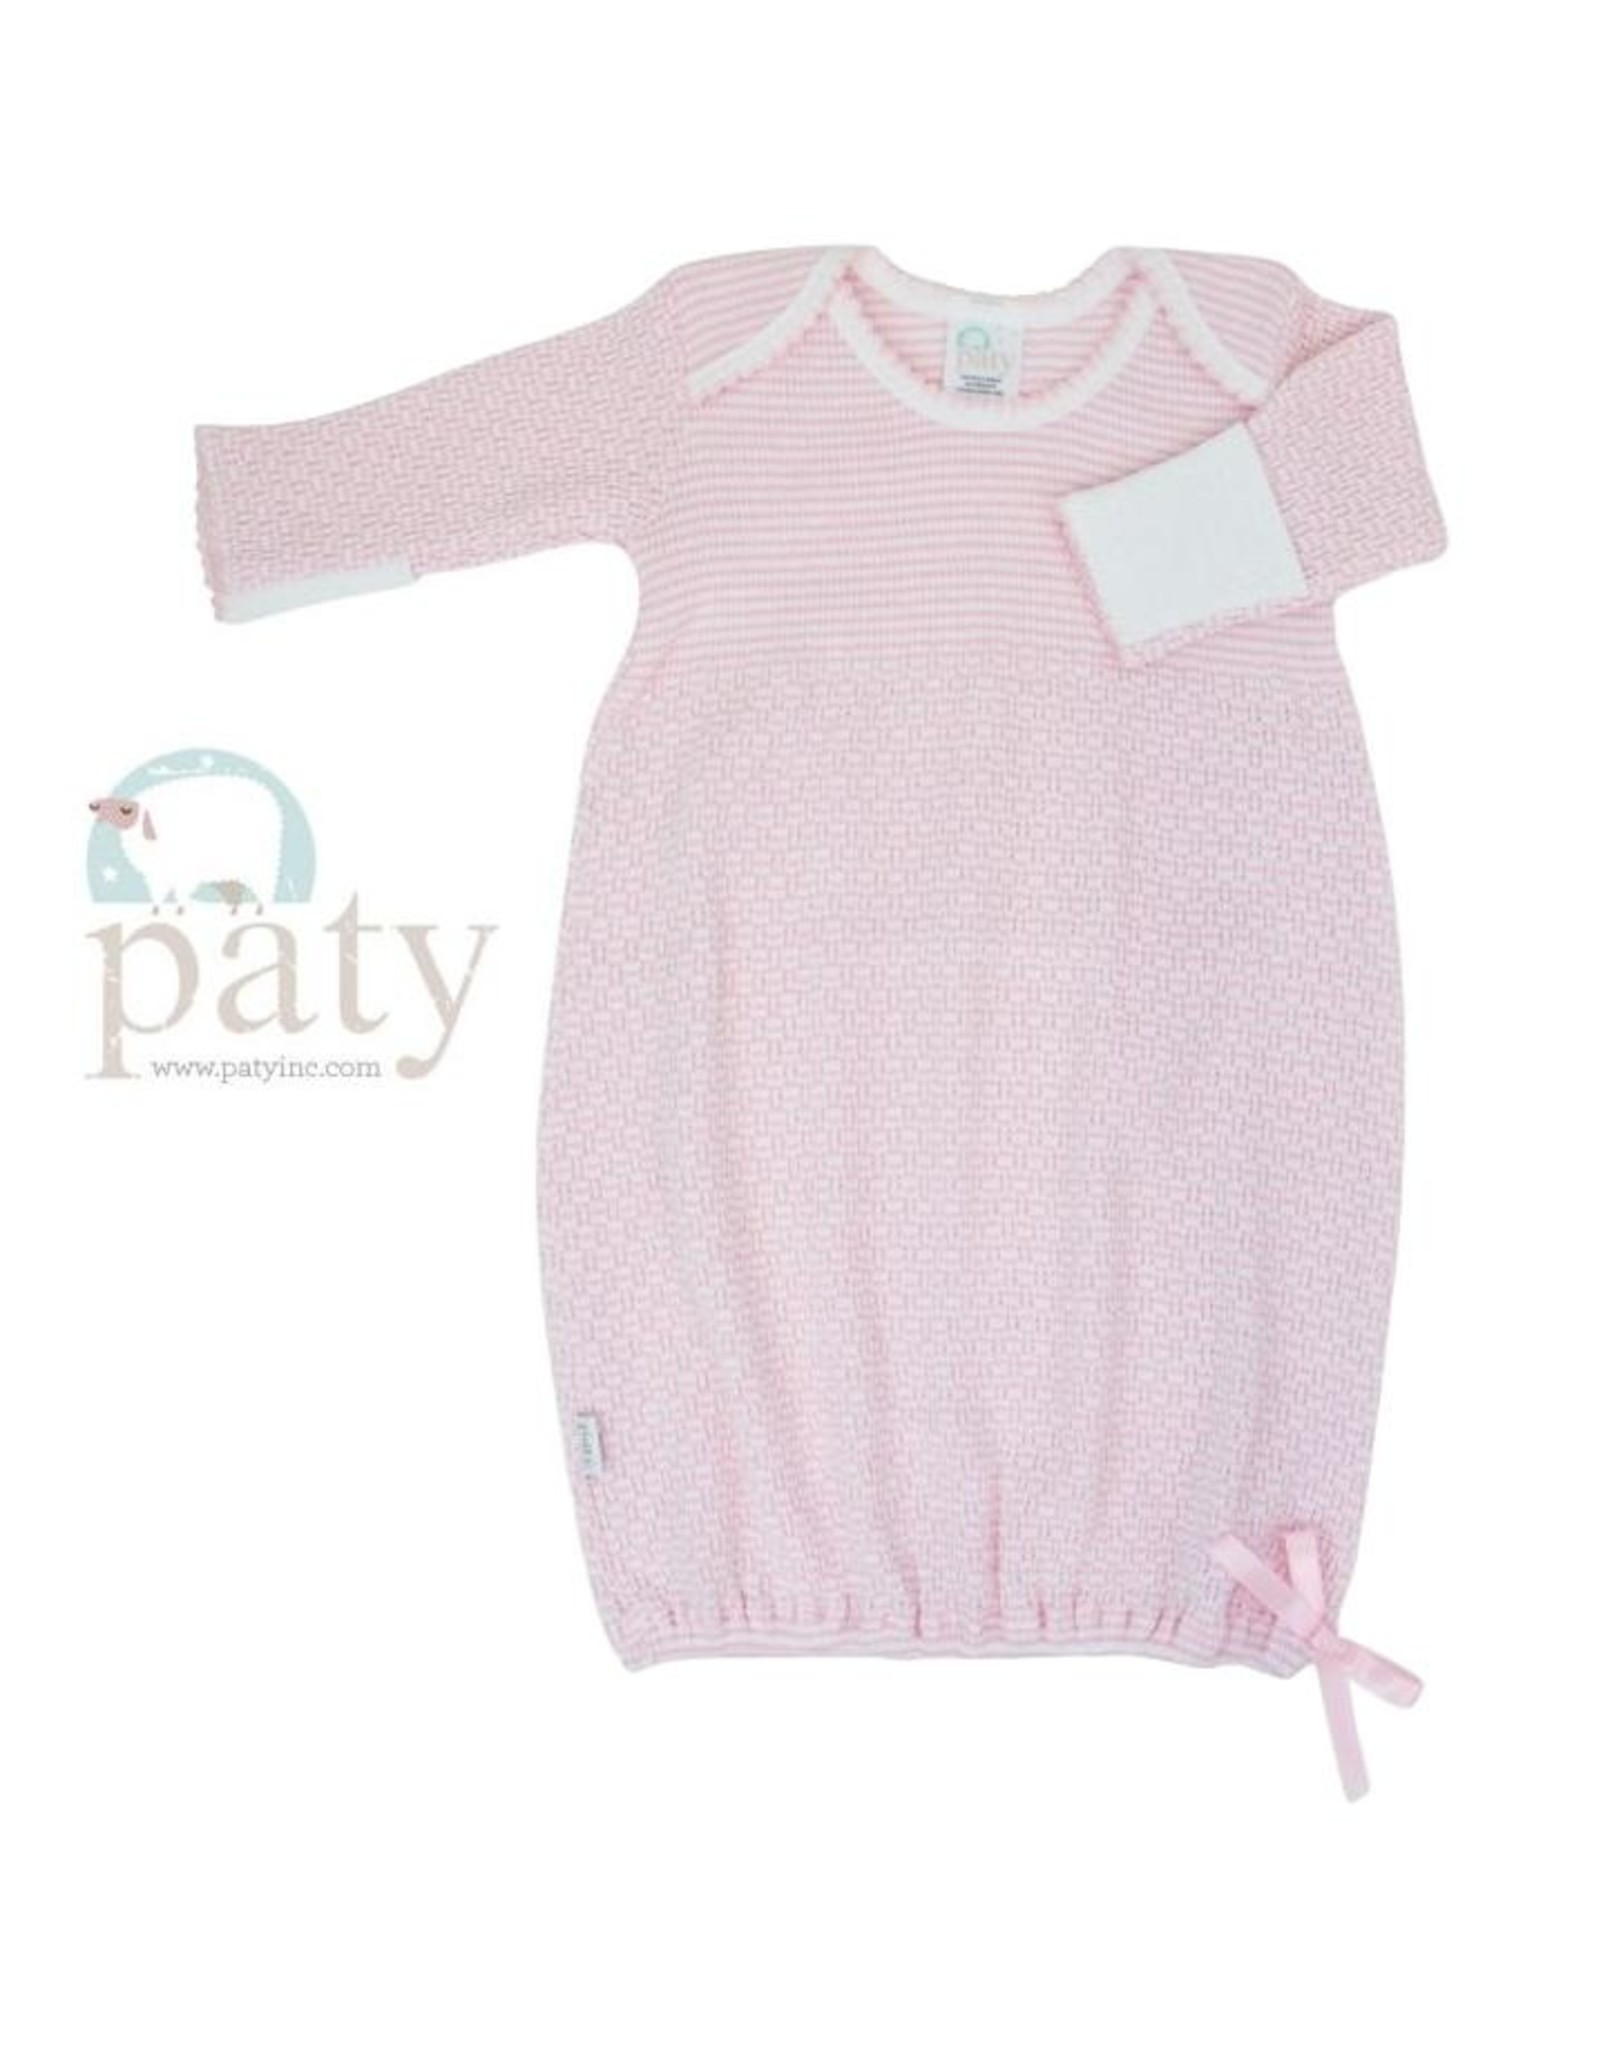 Paty, Inc. 215 Lap shoulder Gown pink